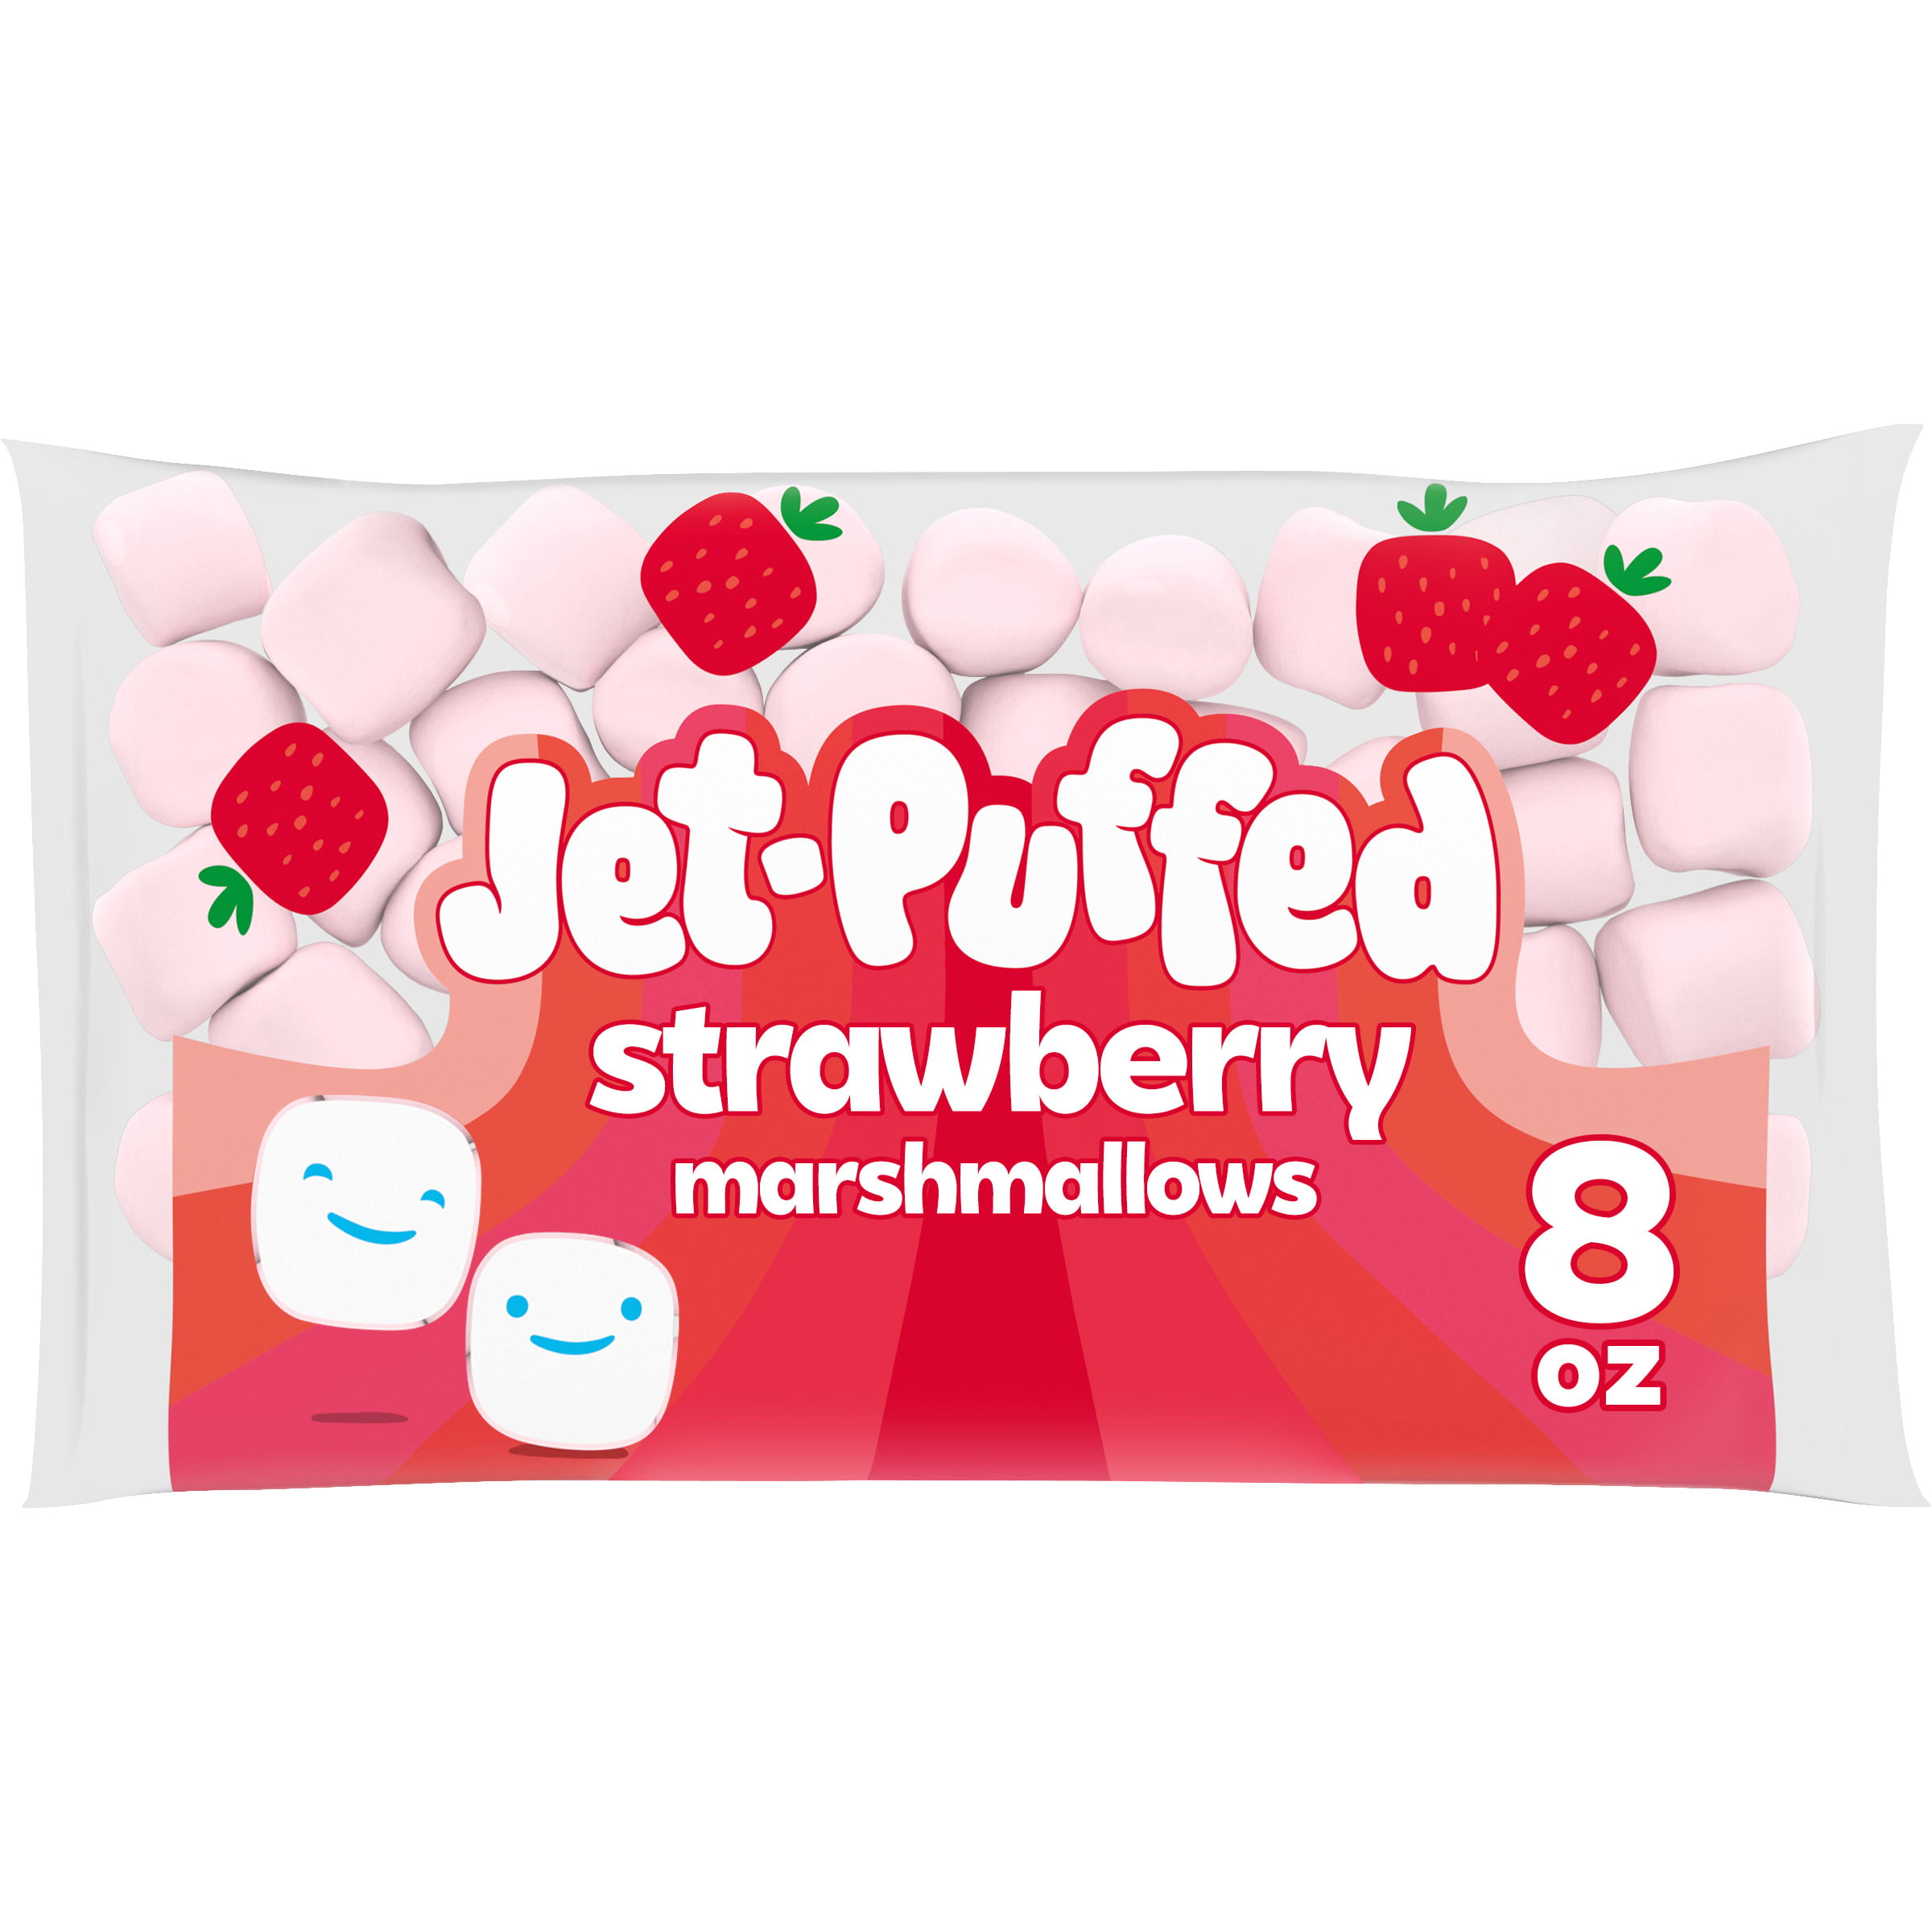 Marshmallow strawberry Homemade Strawberry